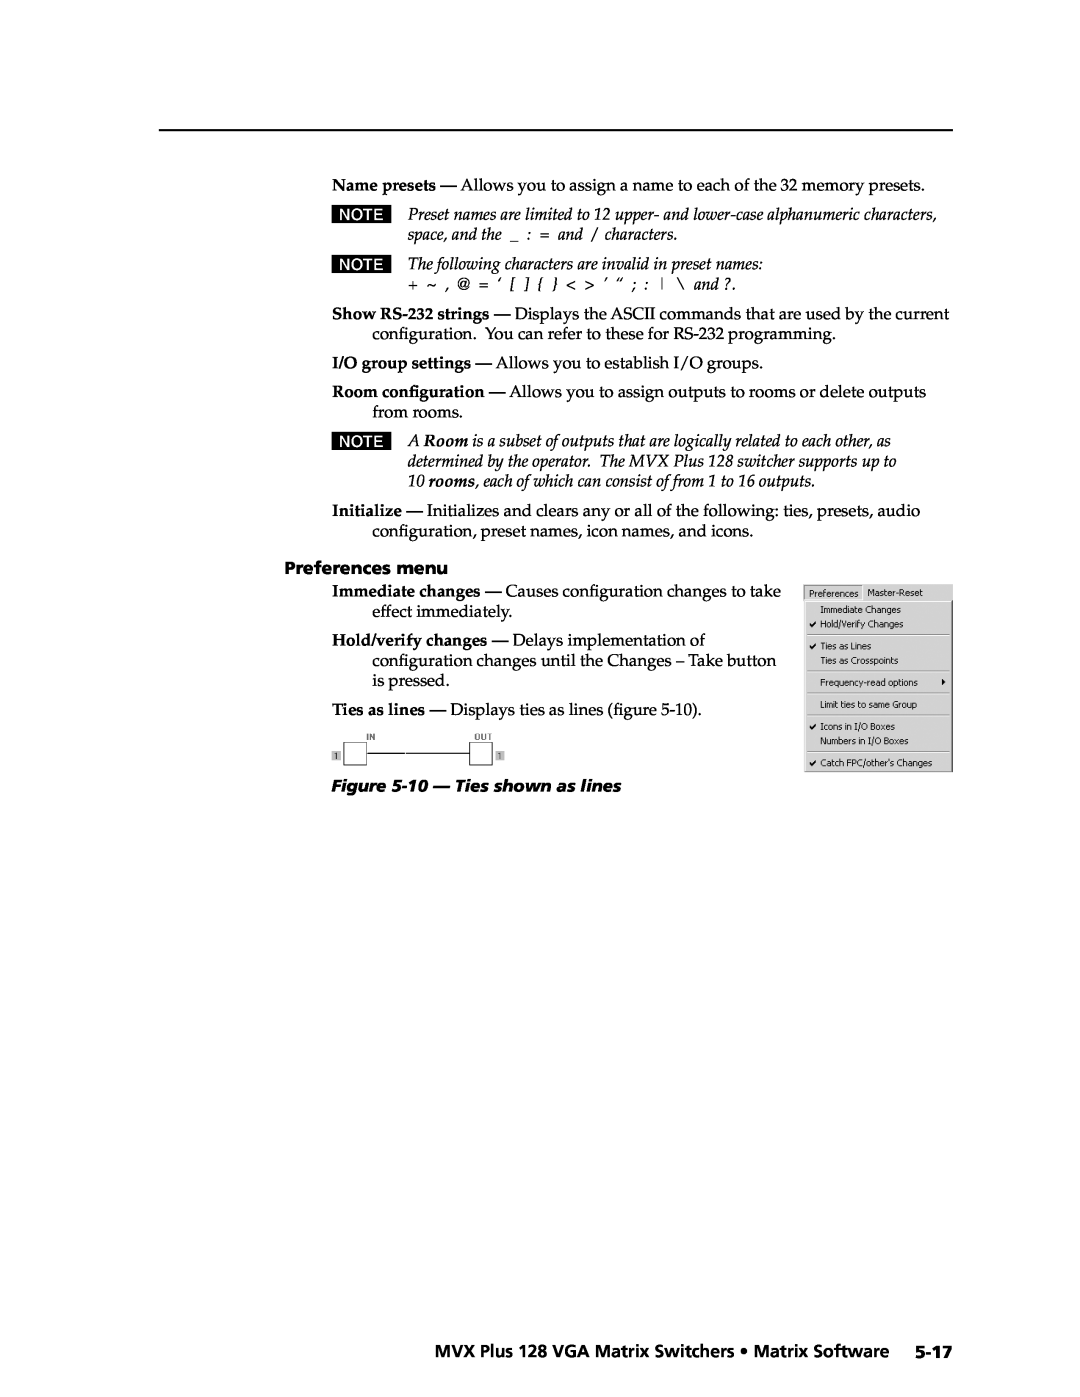 Extron electronic MVX PLUS 128 manual Preferences menu, 10 - Ties shown as lines 